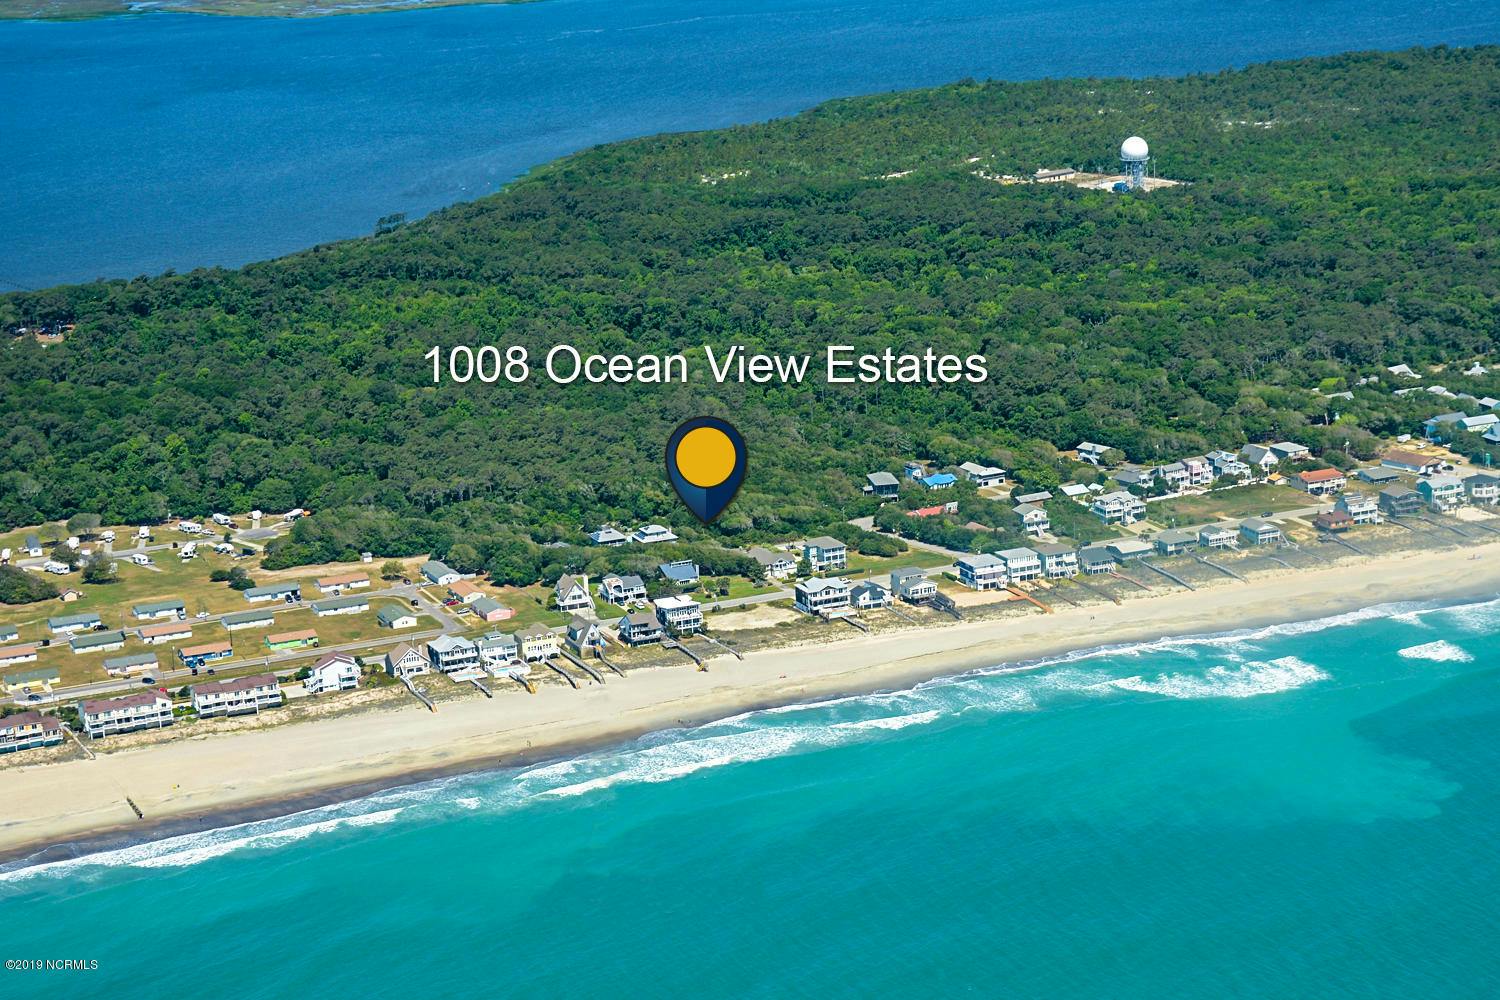 1008 Ocean View Estates aerial view